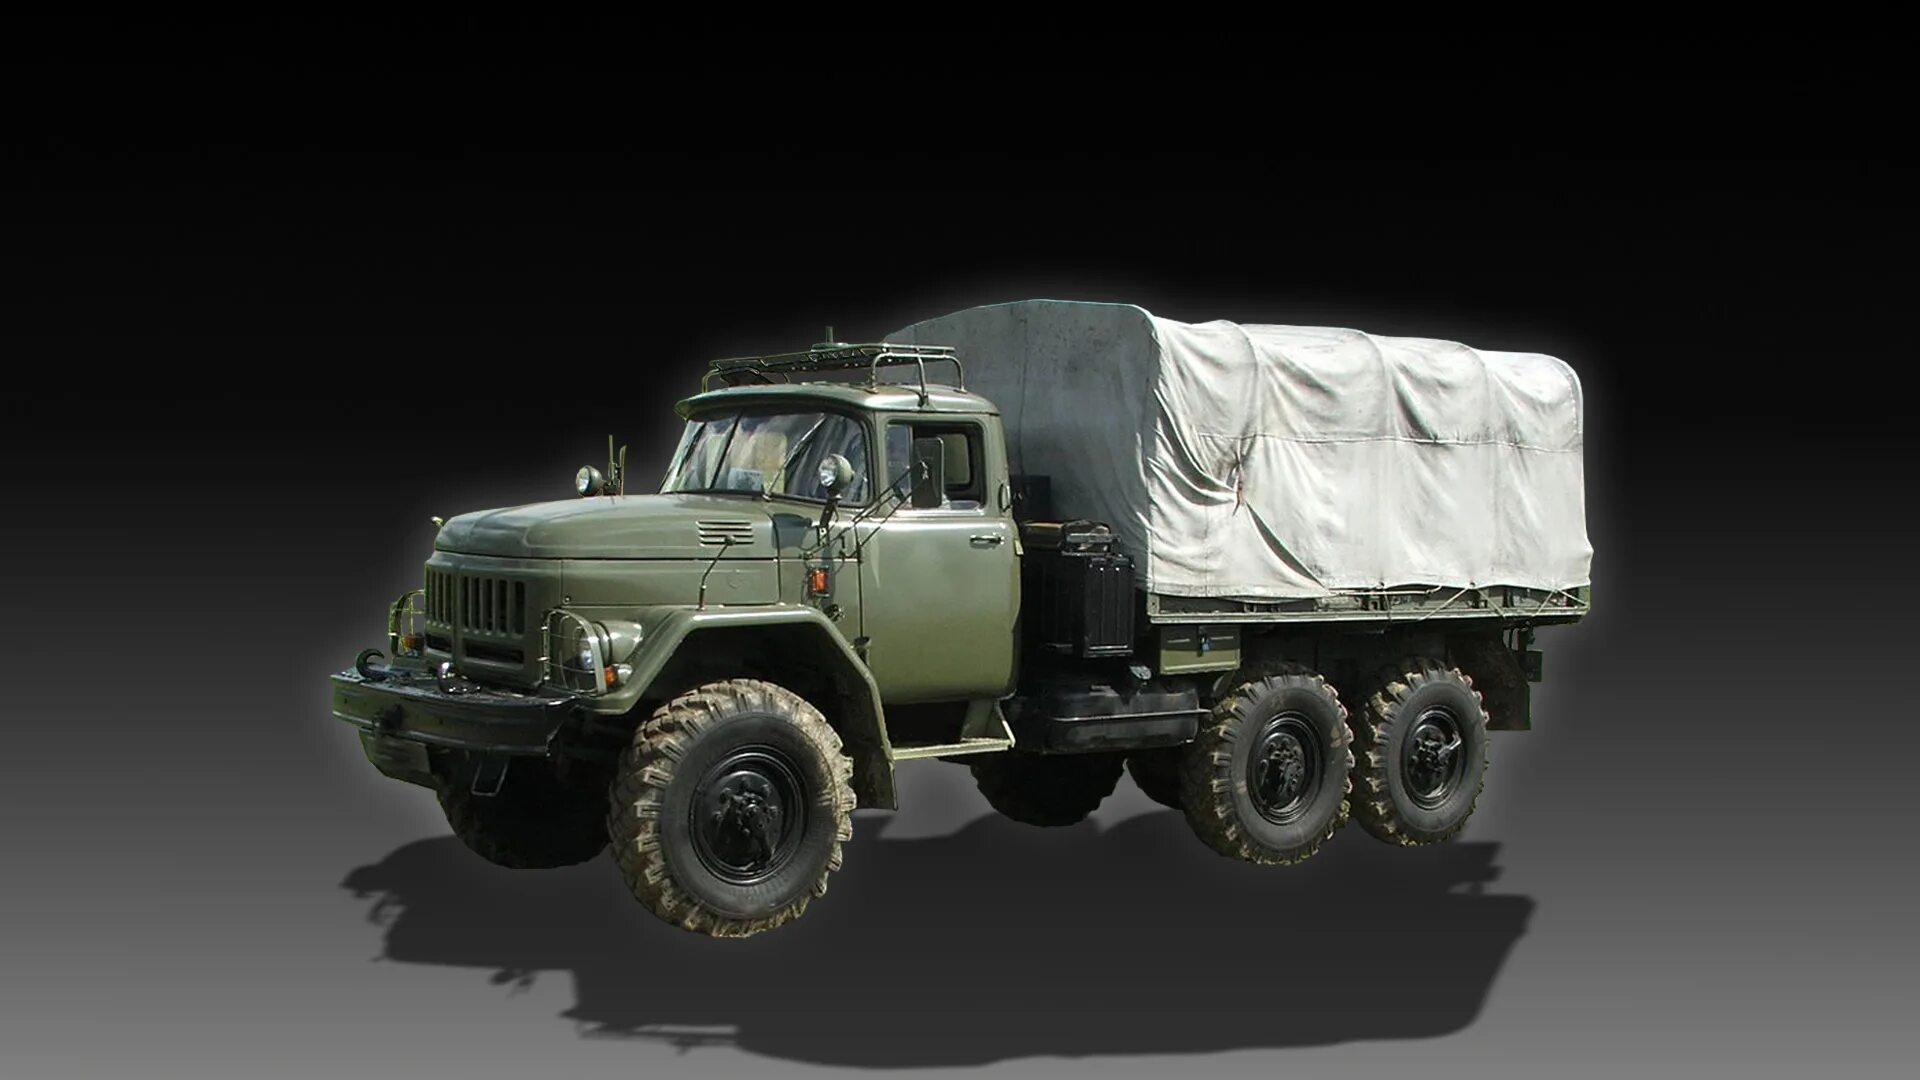 Зил 131 мощность. ЗИЛ-131 грузовой автомобиль. ЗИЛ 131 военный. ЗИЛ-131 грузовой военный. Грузовик ЗИЛ 131 армейский.